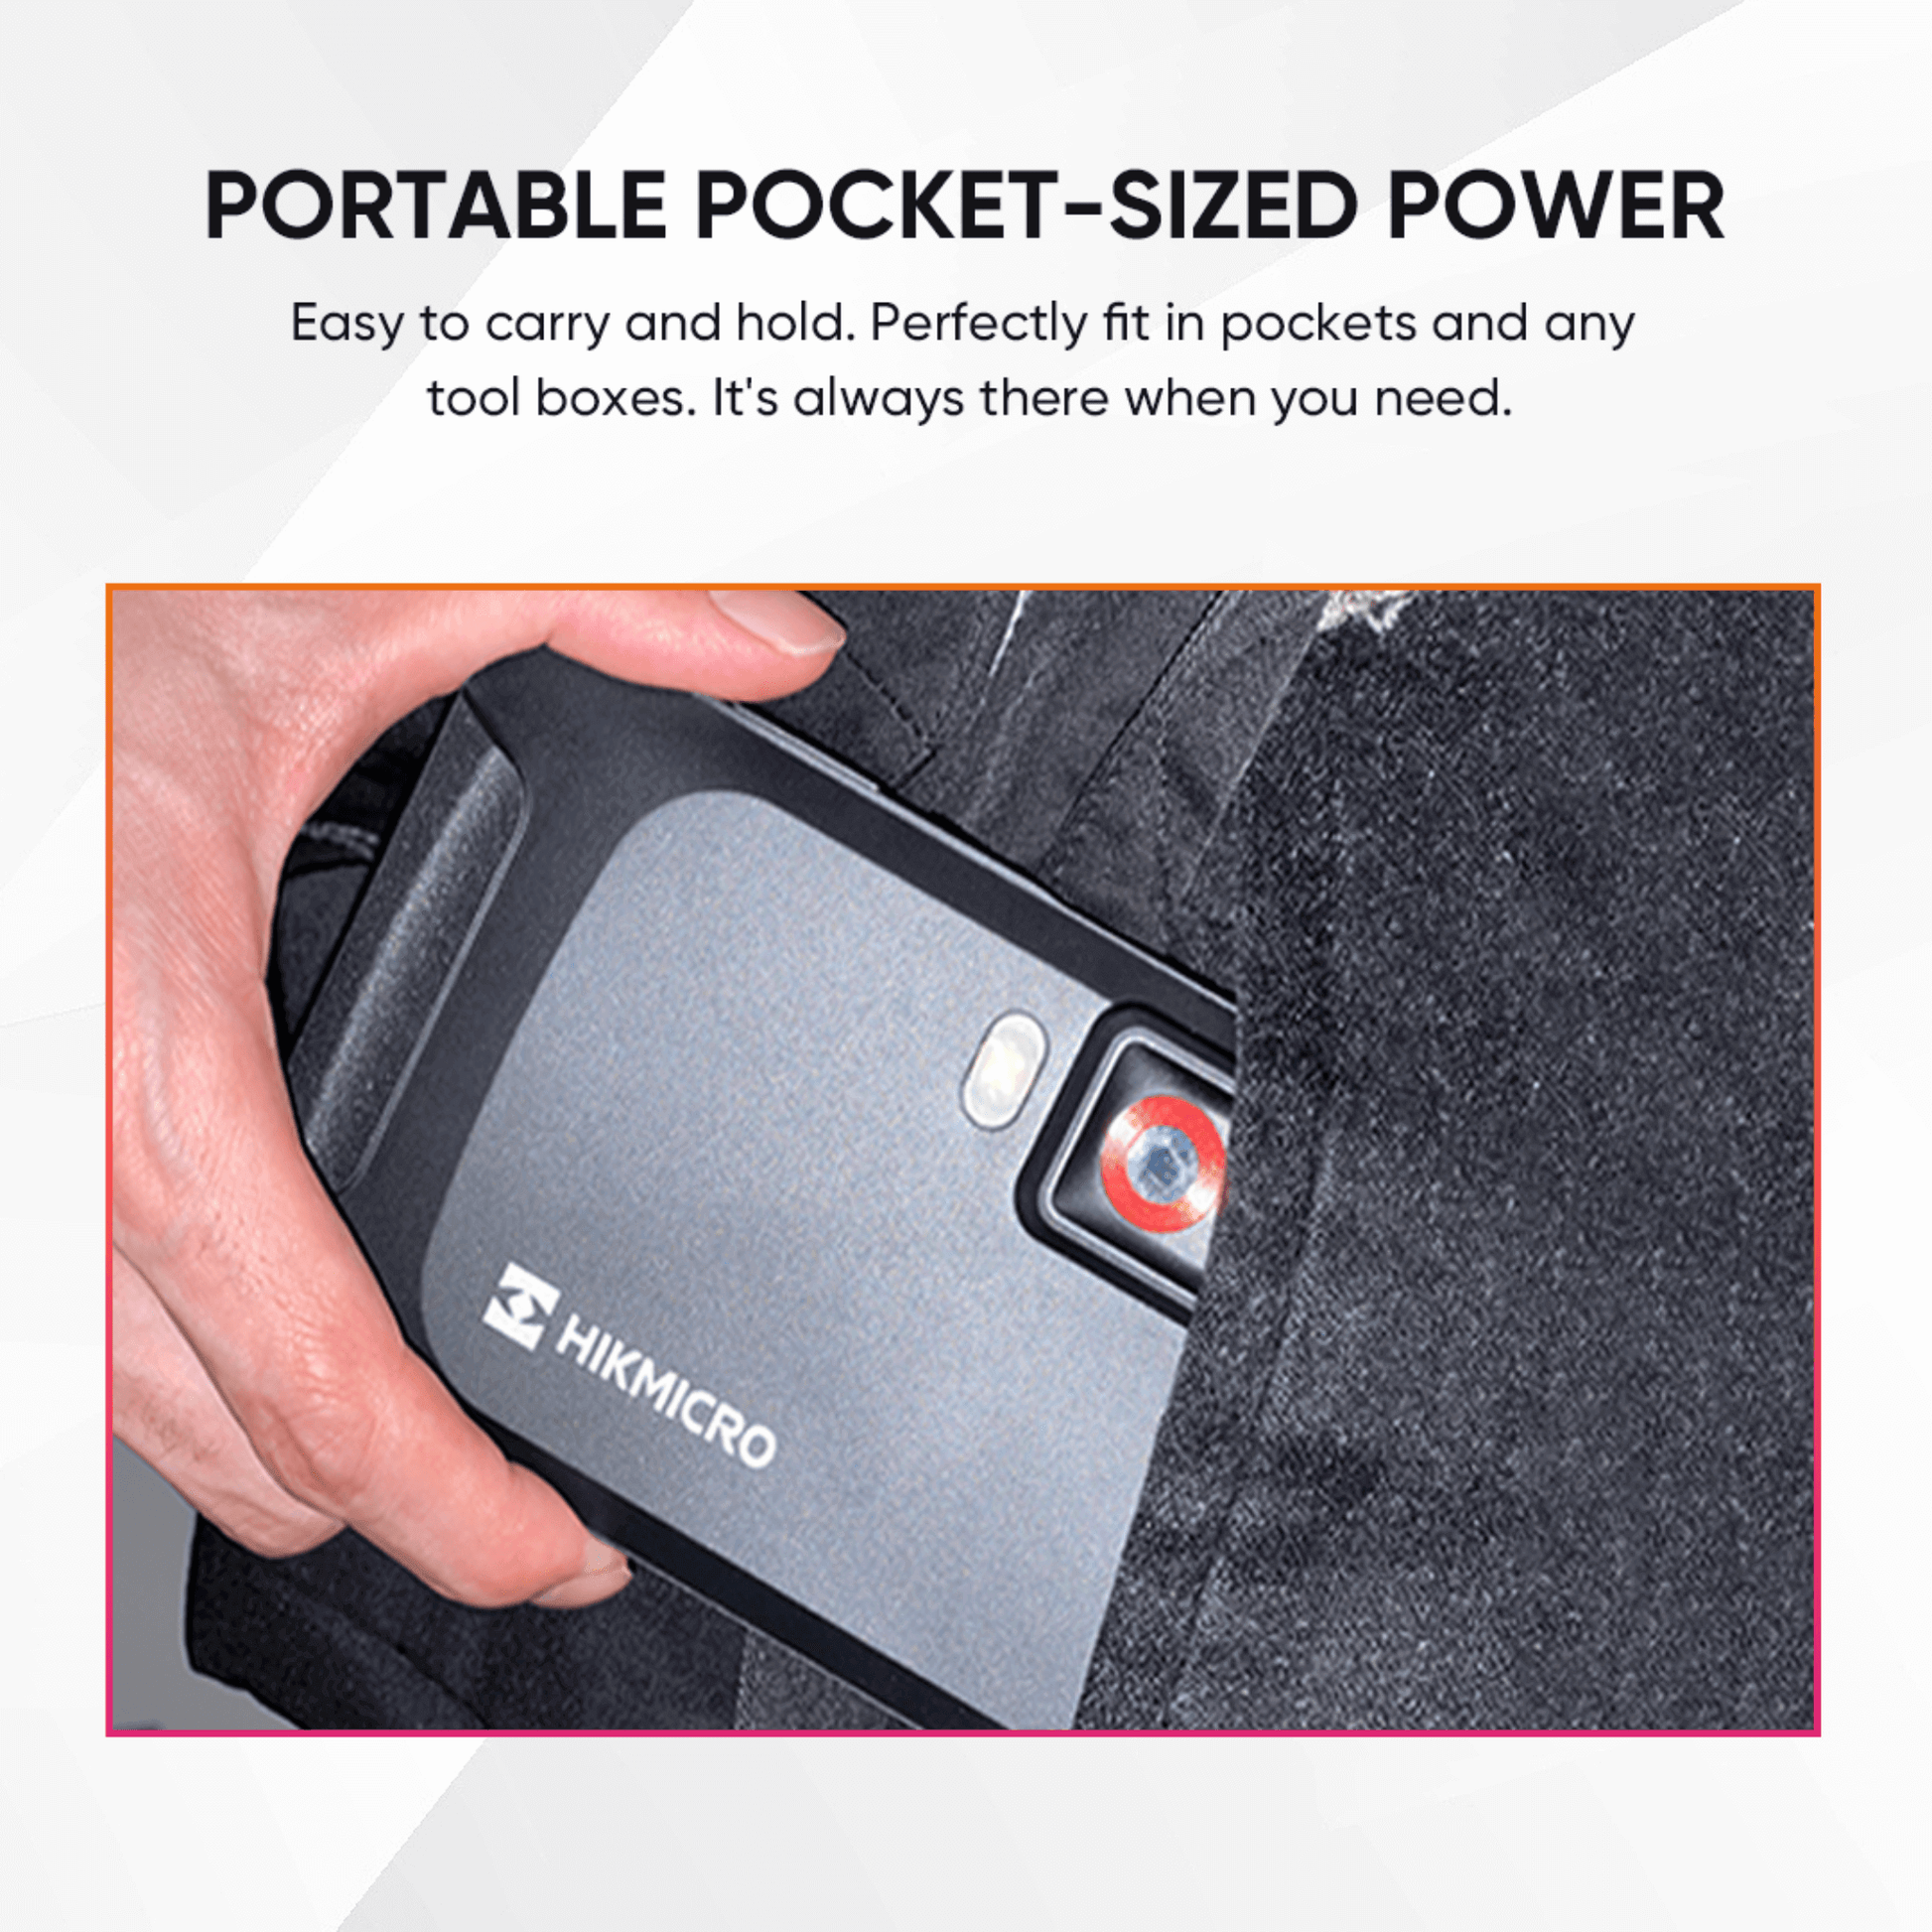 HikMicro Pocket 1 Handheld Thermography Camera Portable Pocket Sized Power